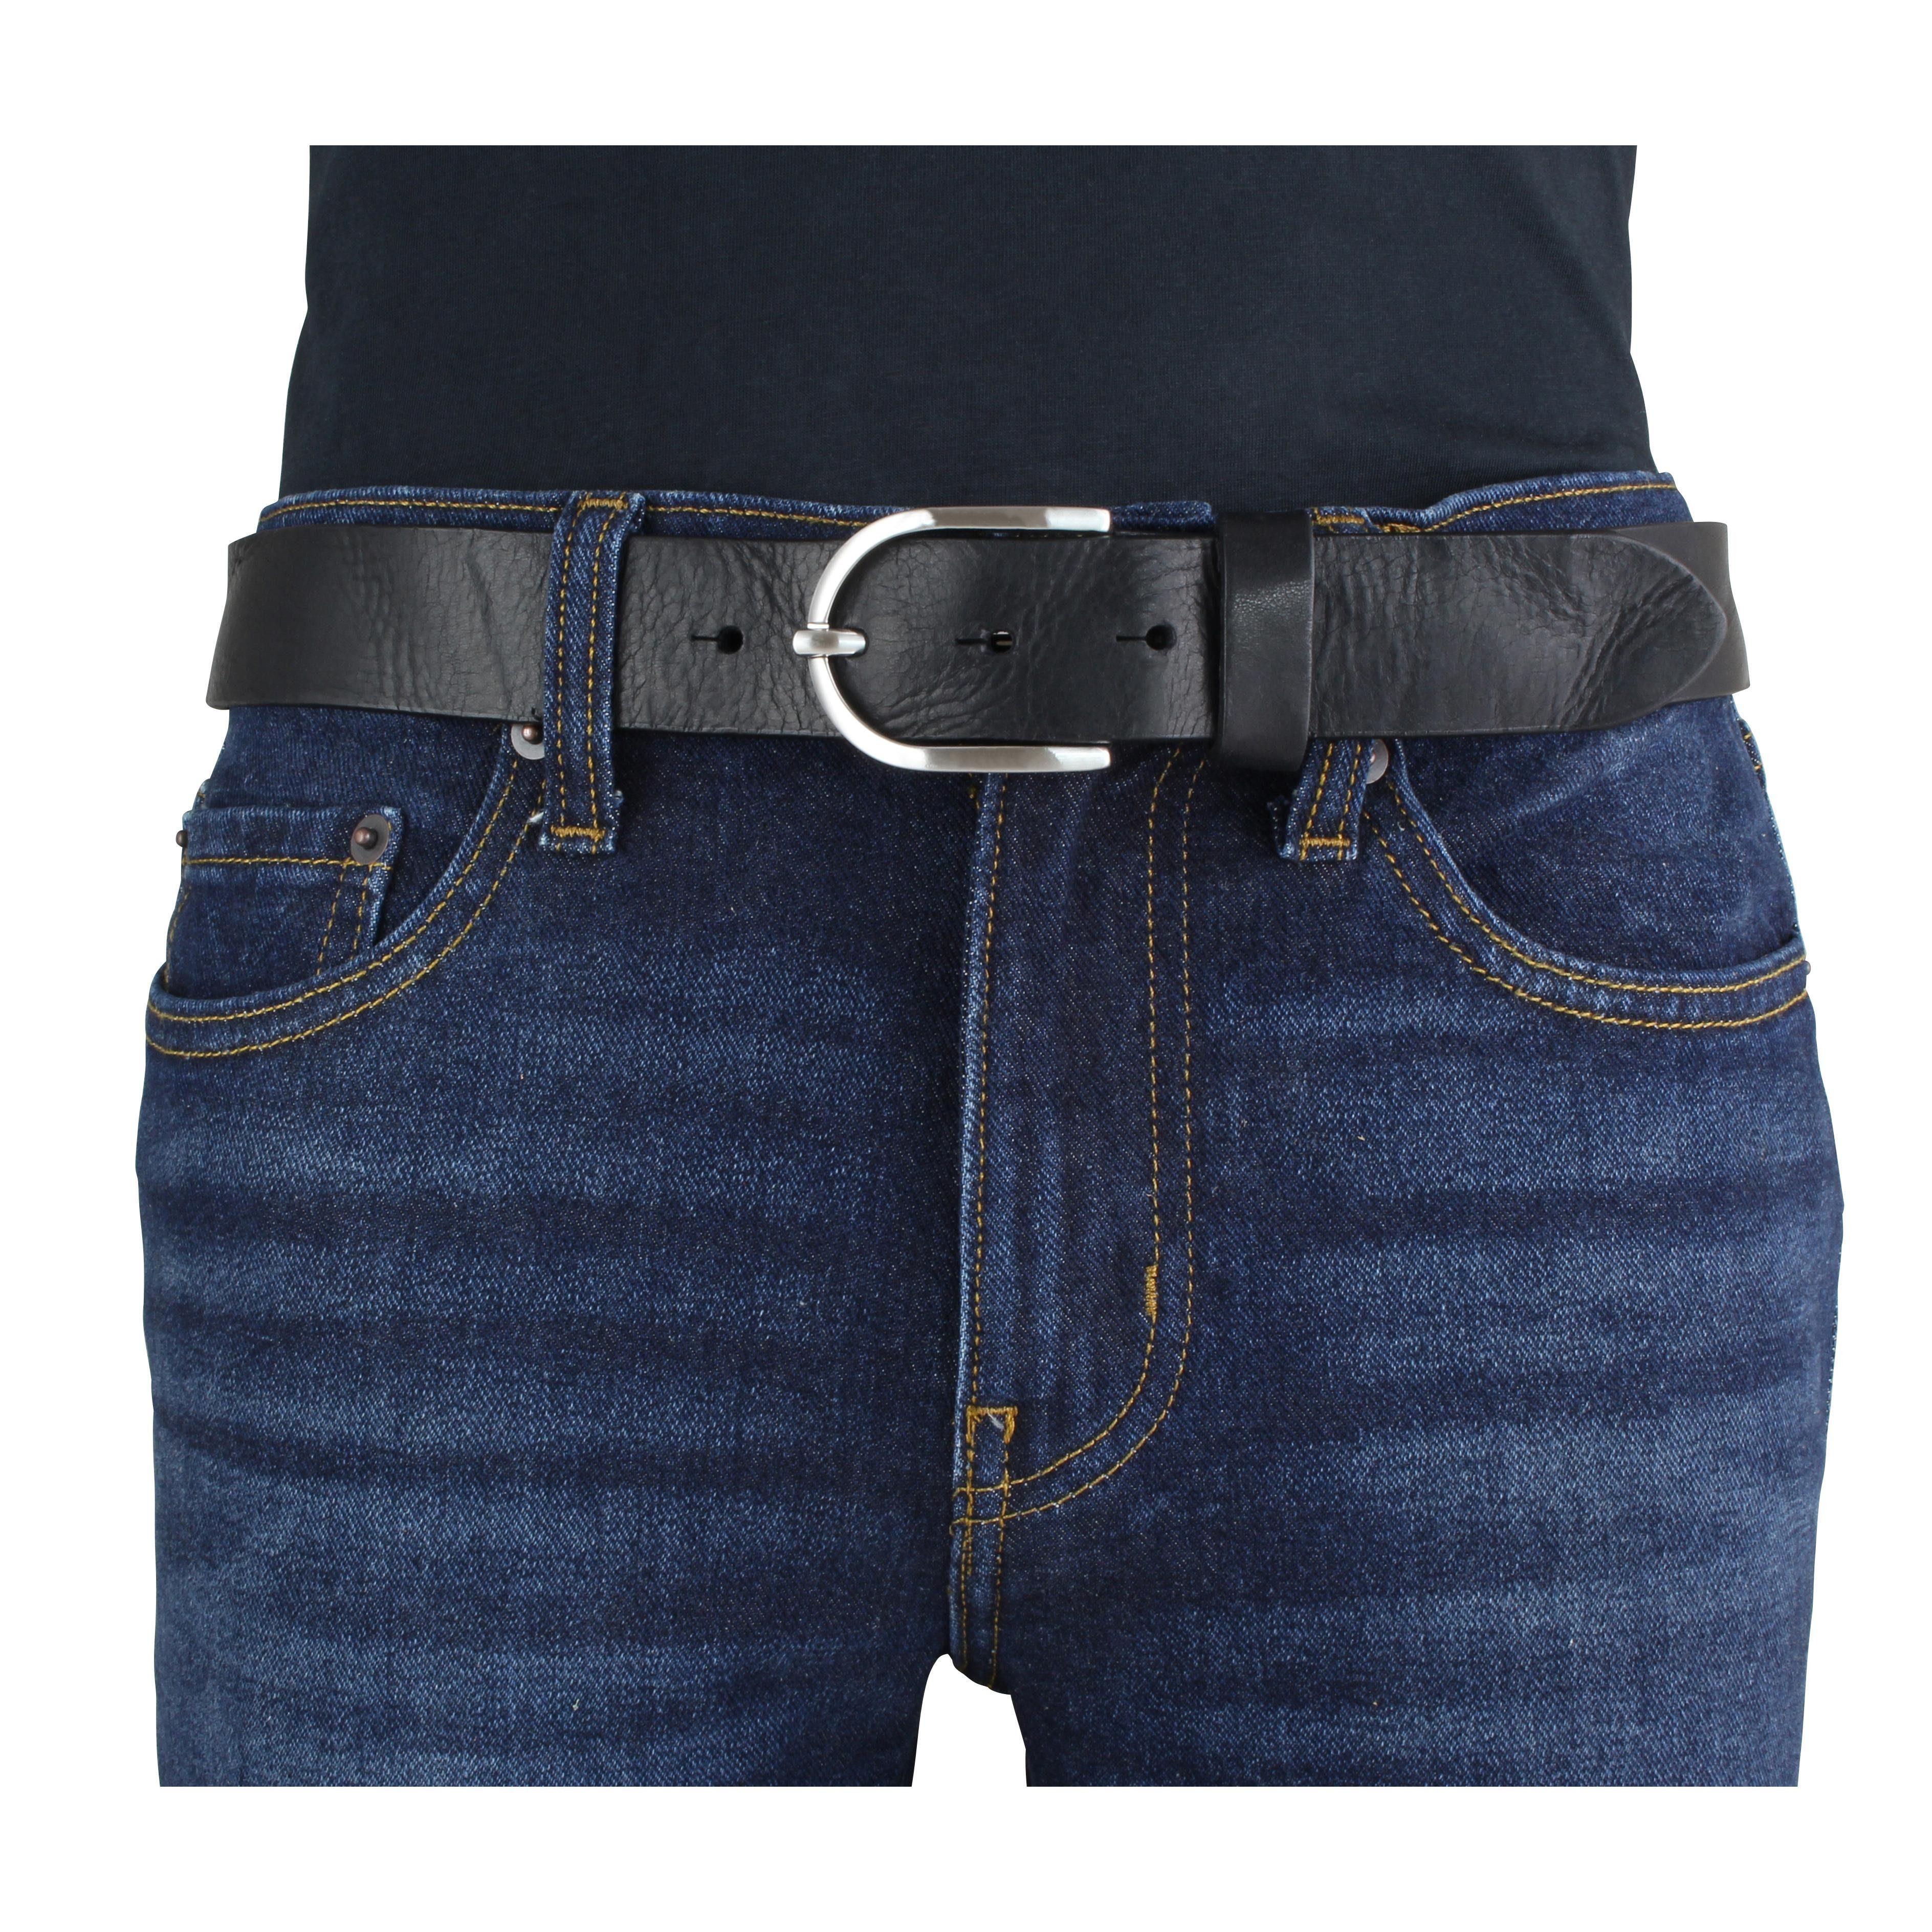 Jeans-Gürtel cm Vollrindleder Ledergürtel 3,5 Dam Damen-Gürtel - aus Used-Look Marine, BELTINGER für Silber